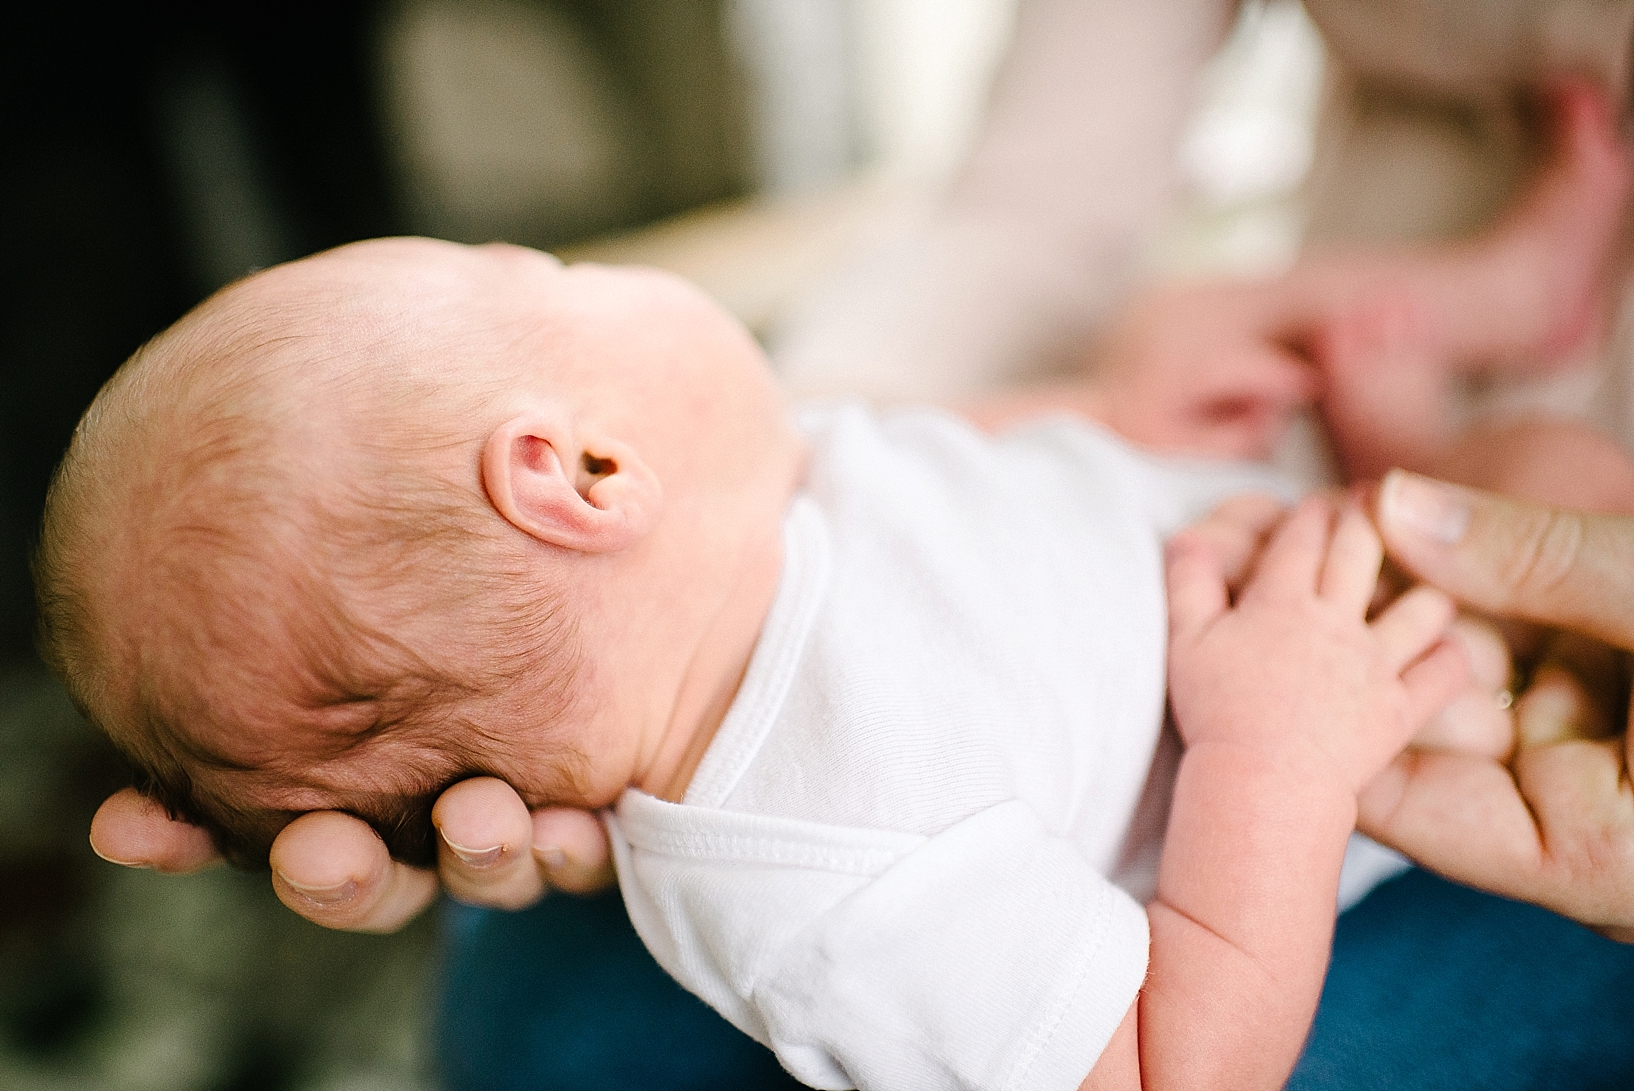 newborn baby in white onesie in mother's hands